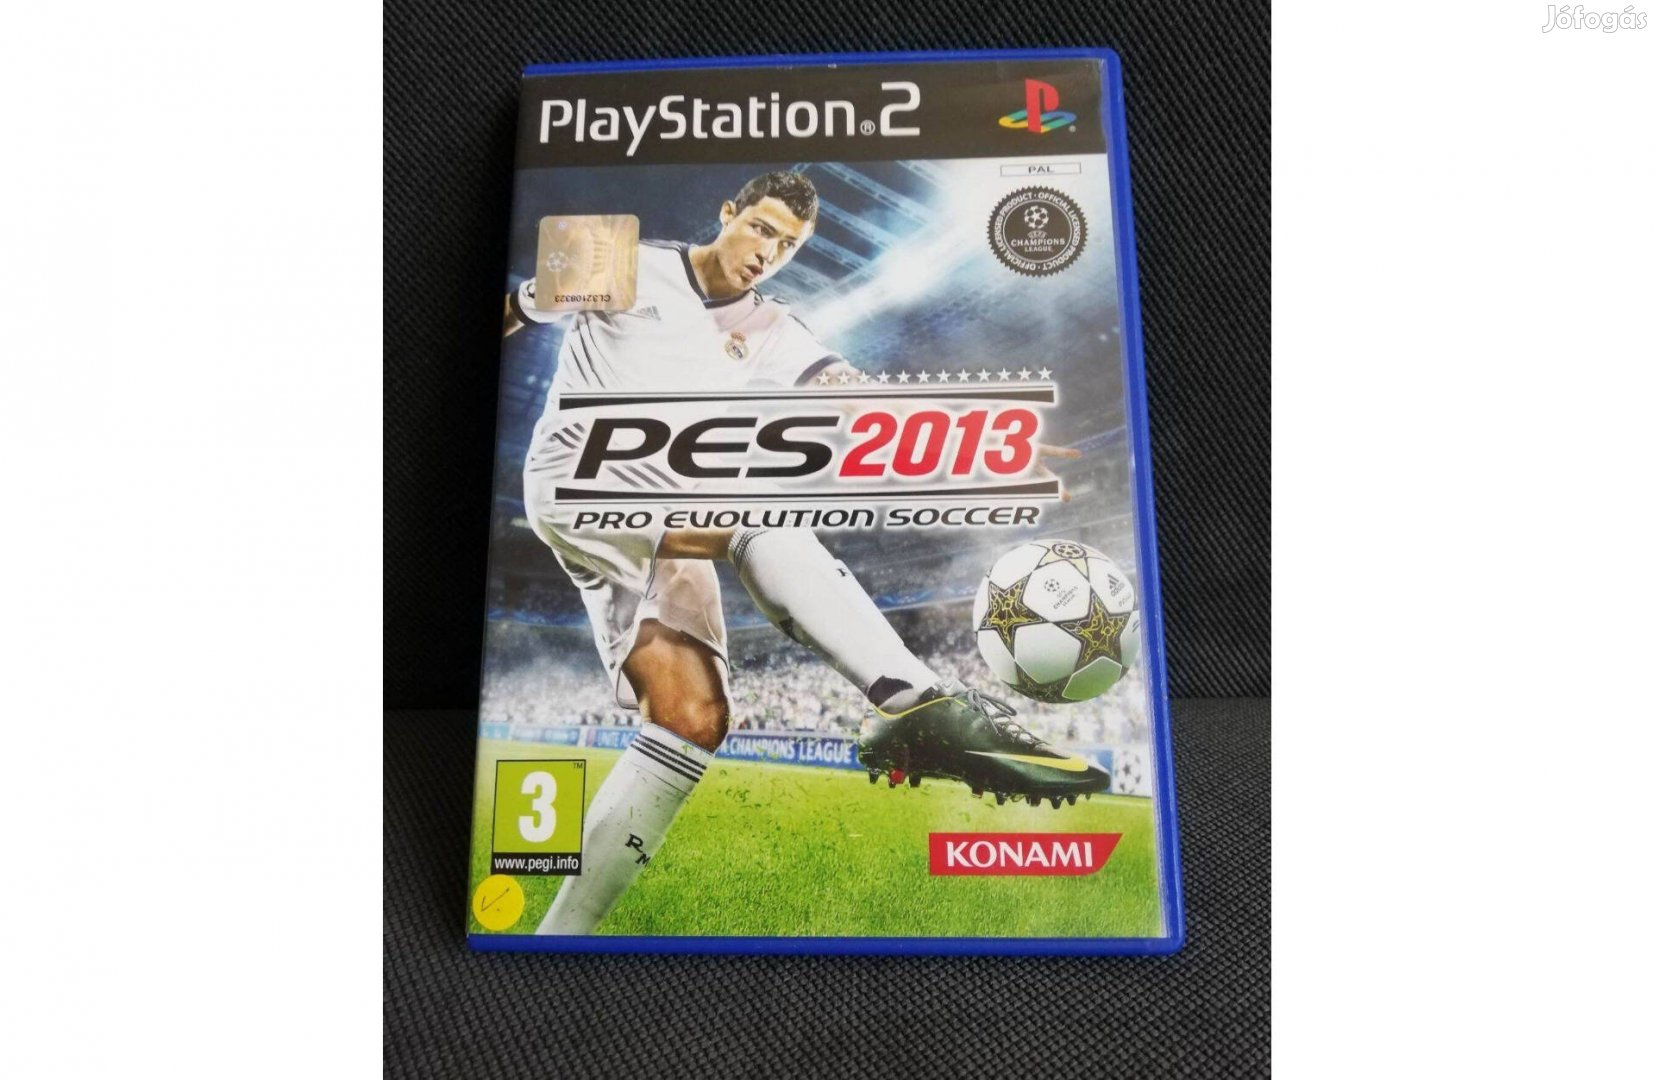 PES 2013 (Pro Evolution Soccer) - Playstation 2 (PS2) játék eladó